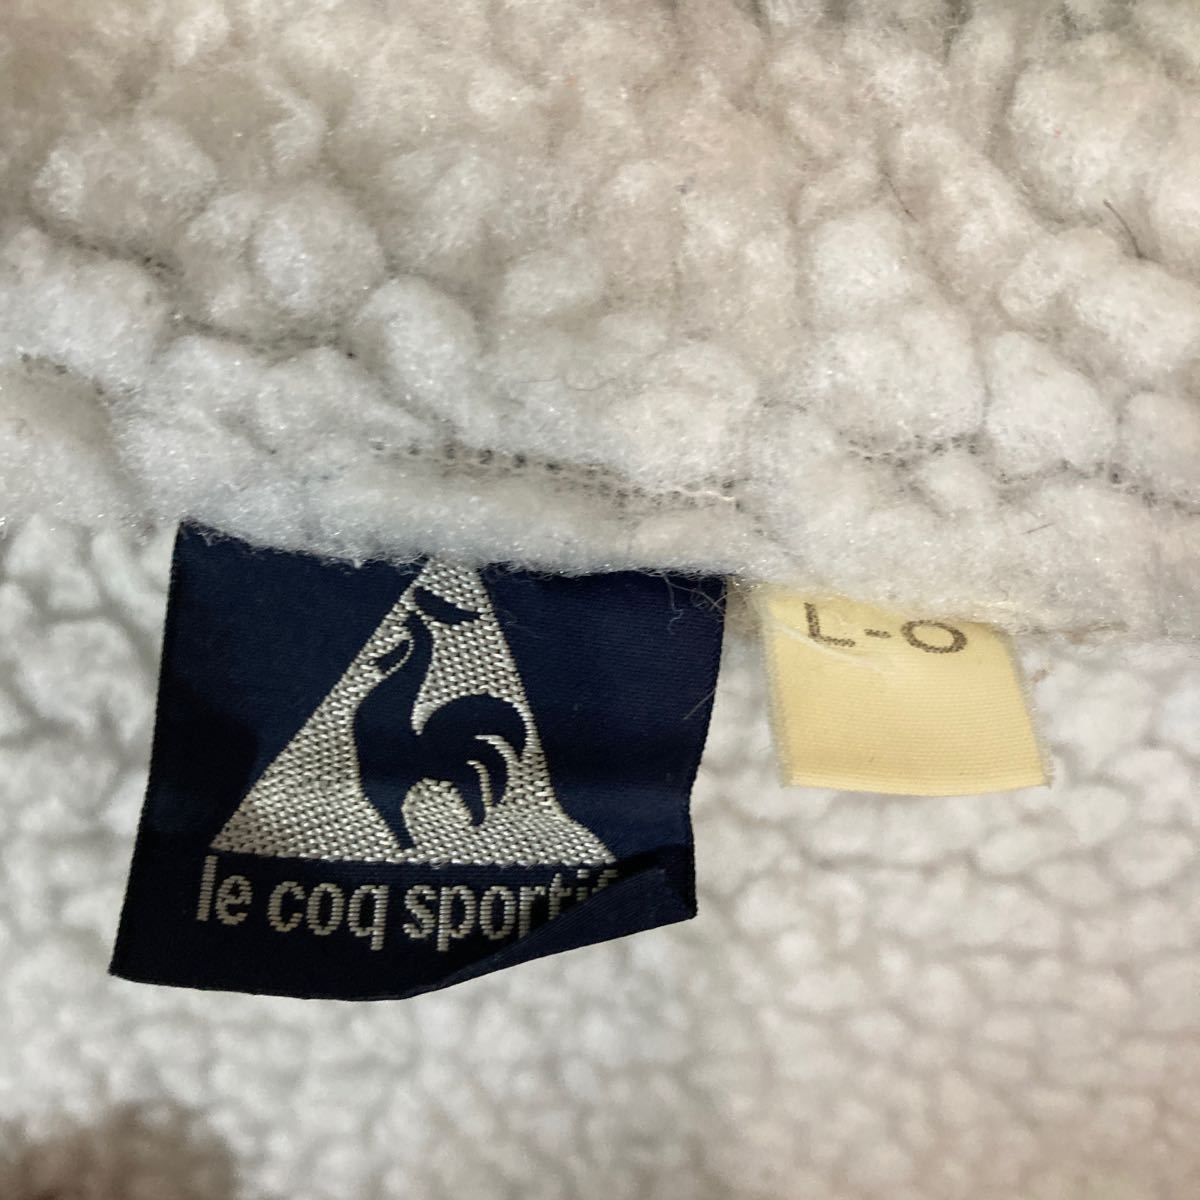 le coq sportif Le Coq bench пальто джемпер L~O размер темно-синий Vintage обратная сторона боа защищающий от холода зимний 